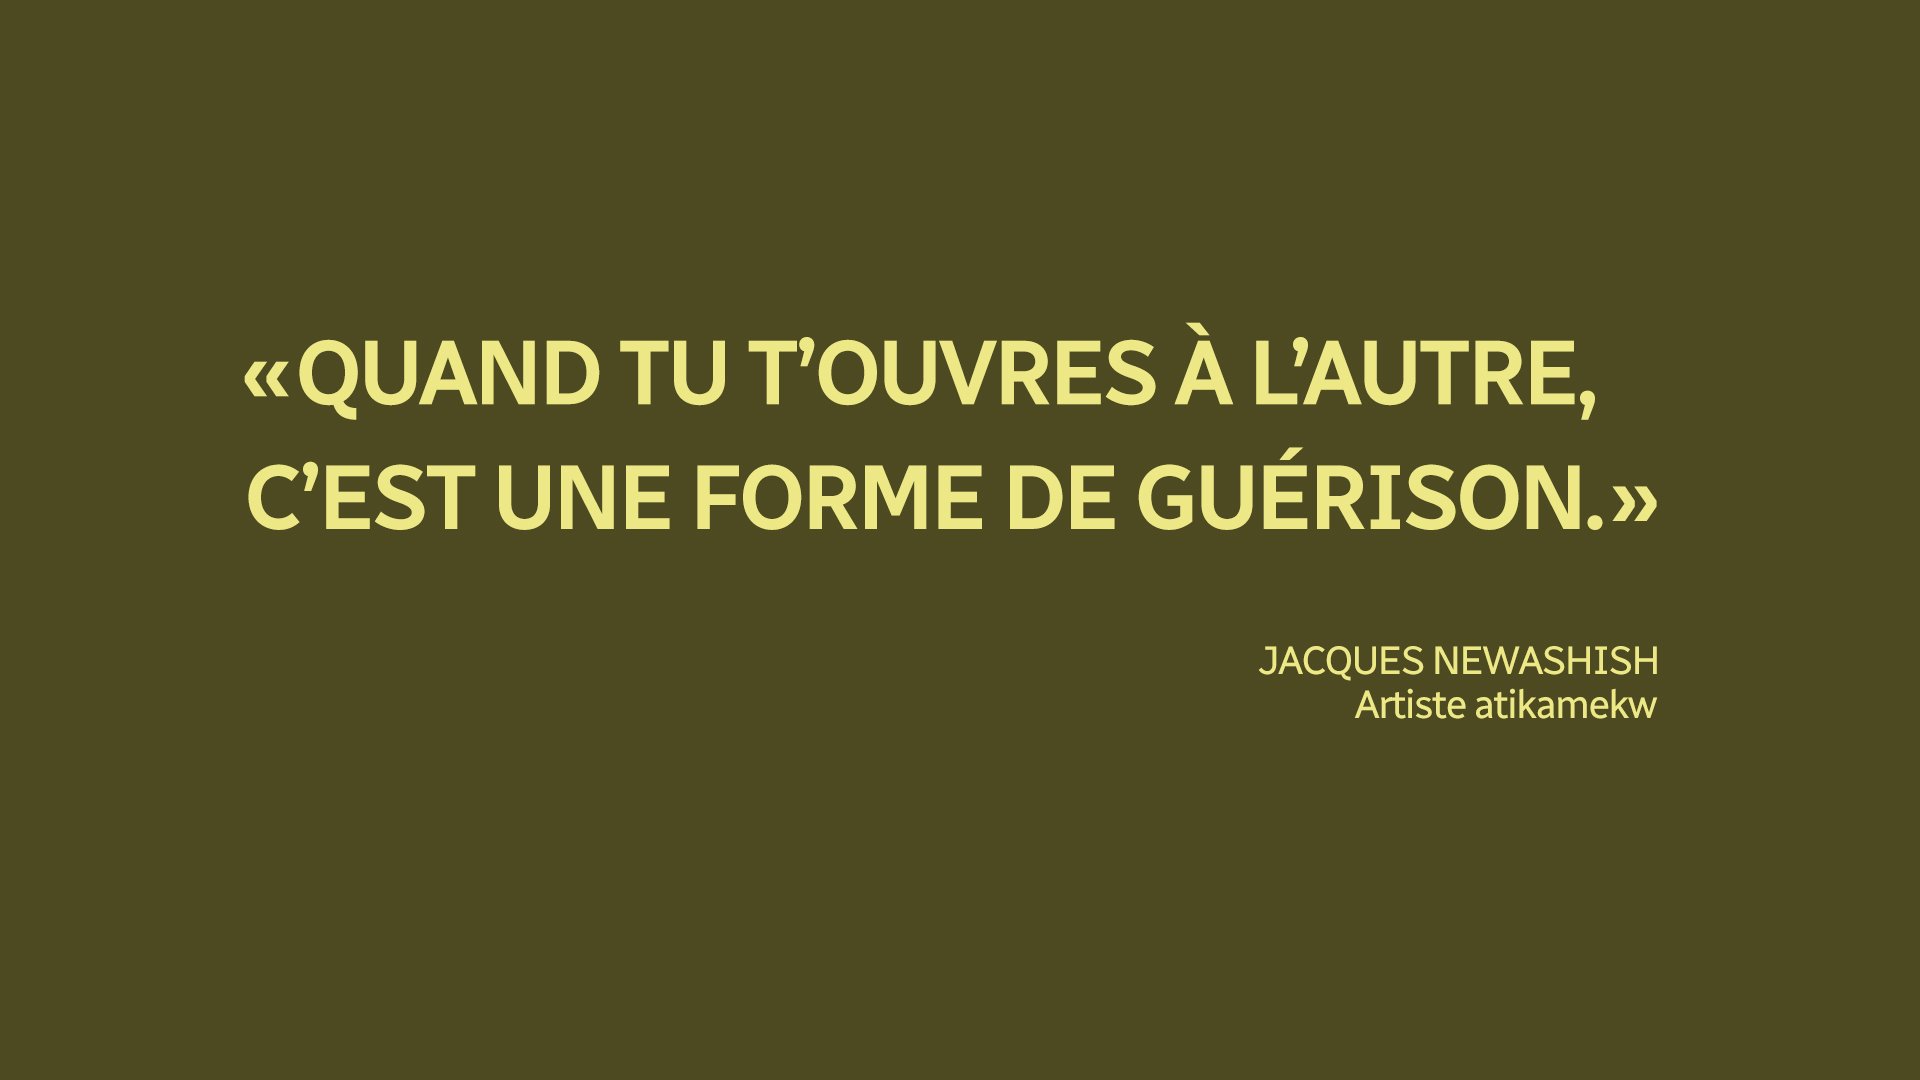 Jacques Newashish